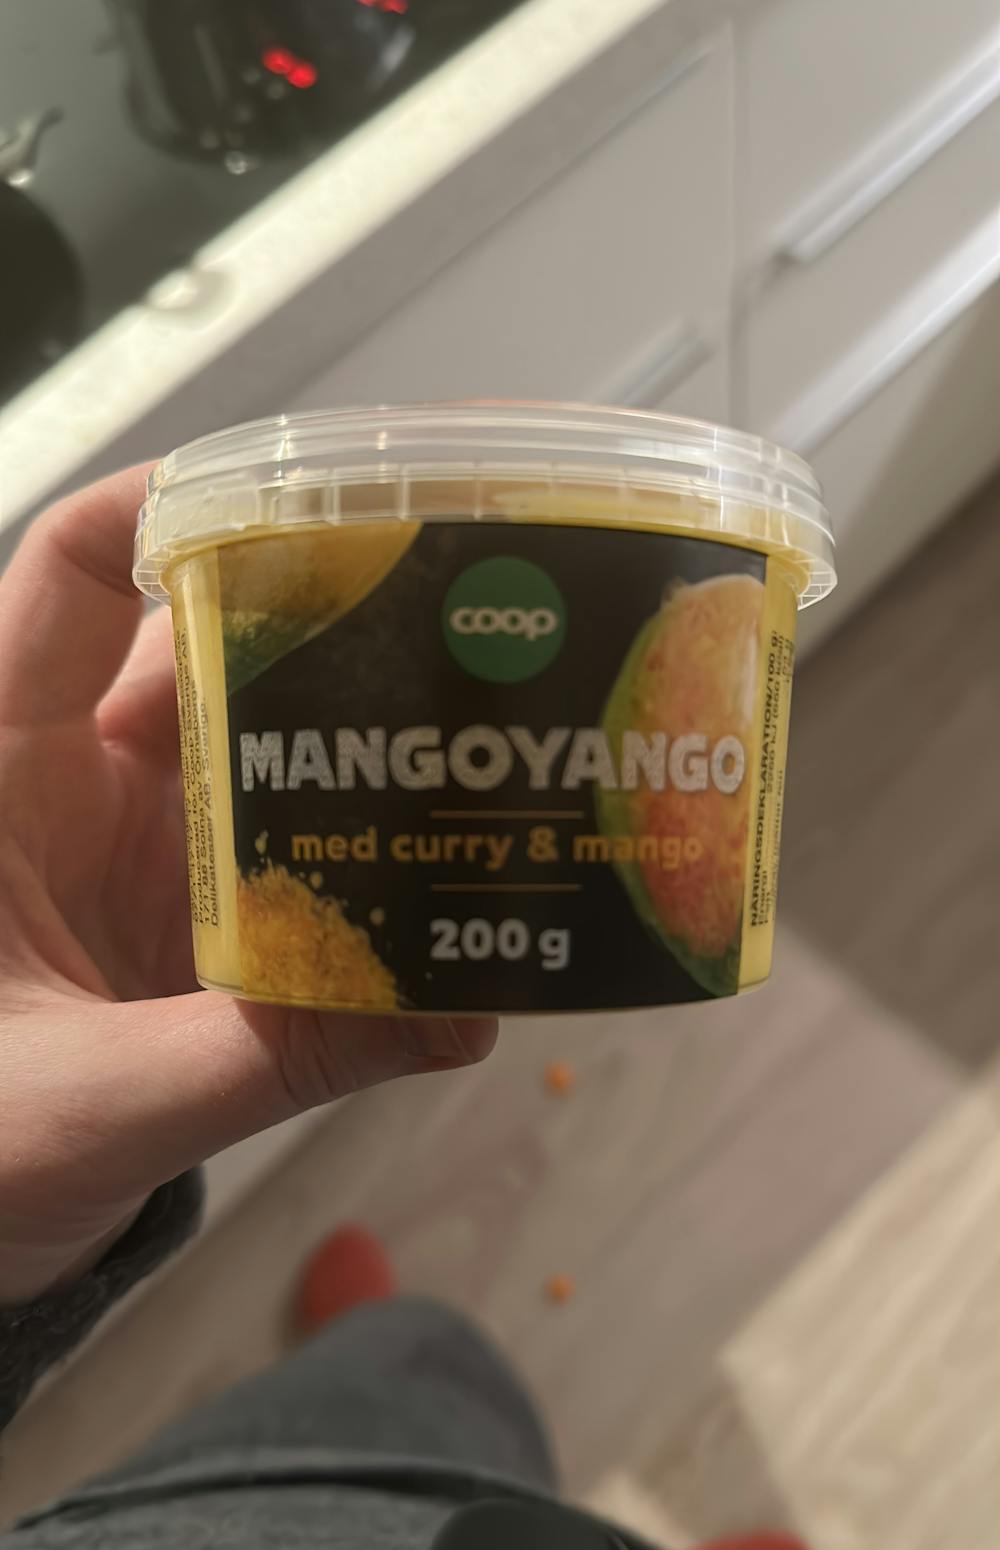 Mangoyango, Coop